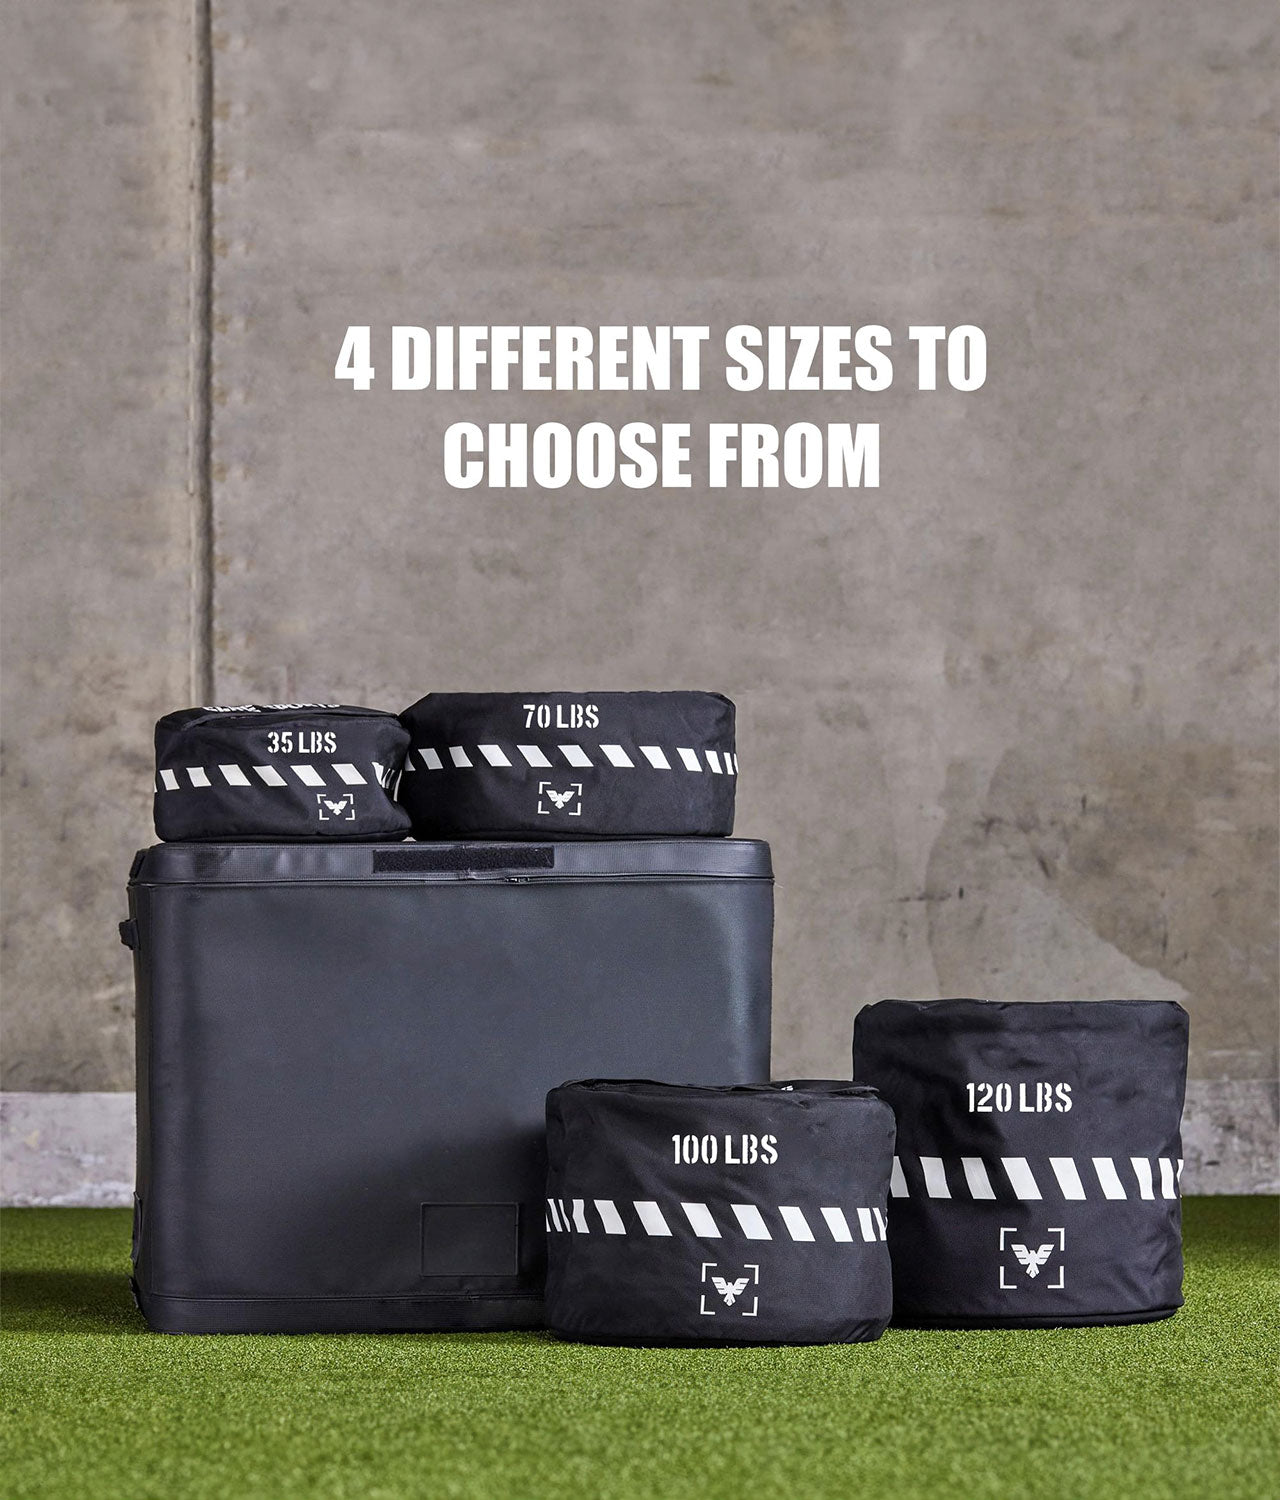 Elite Sports Core Round Workout Sandbag 70 lbs  4Different Sizes to Choose